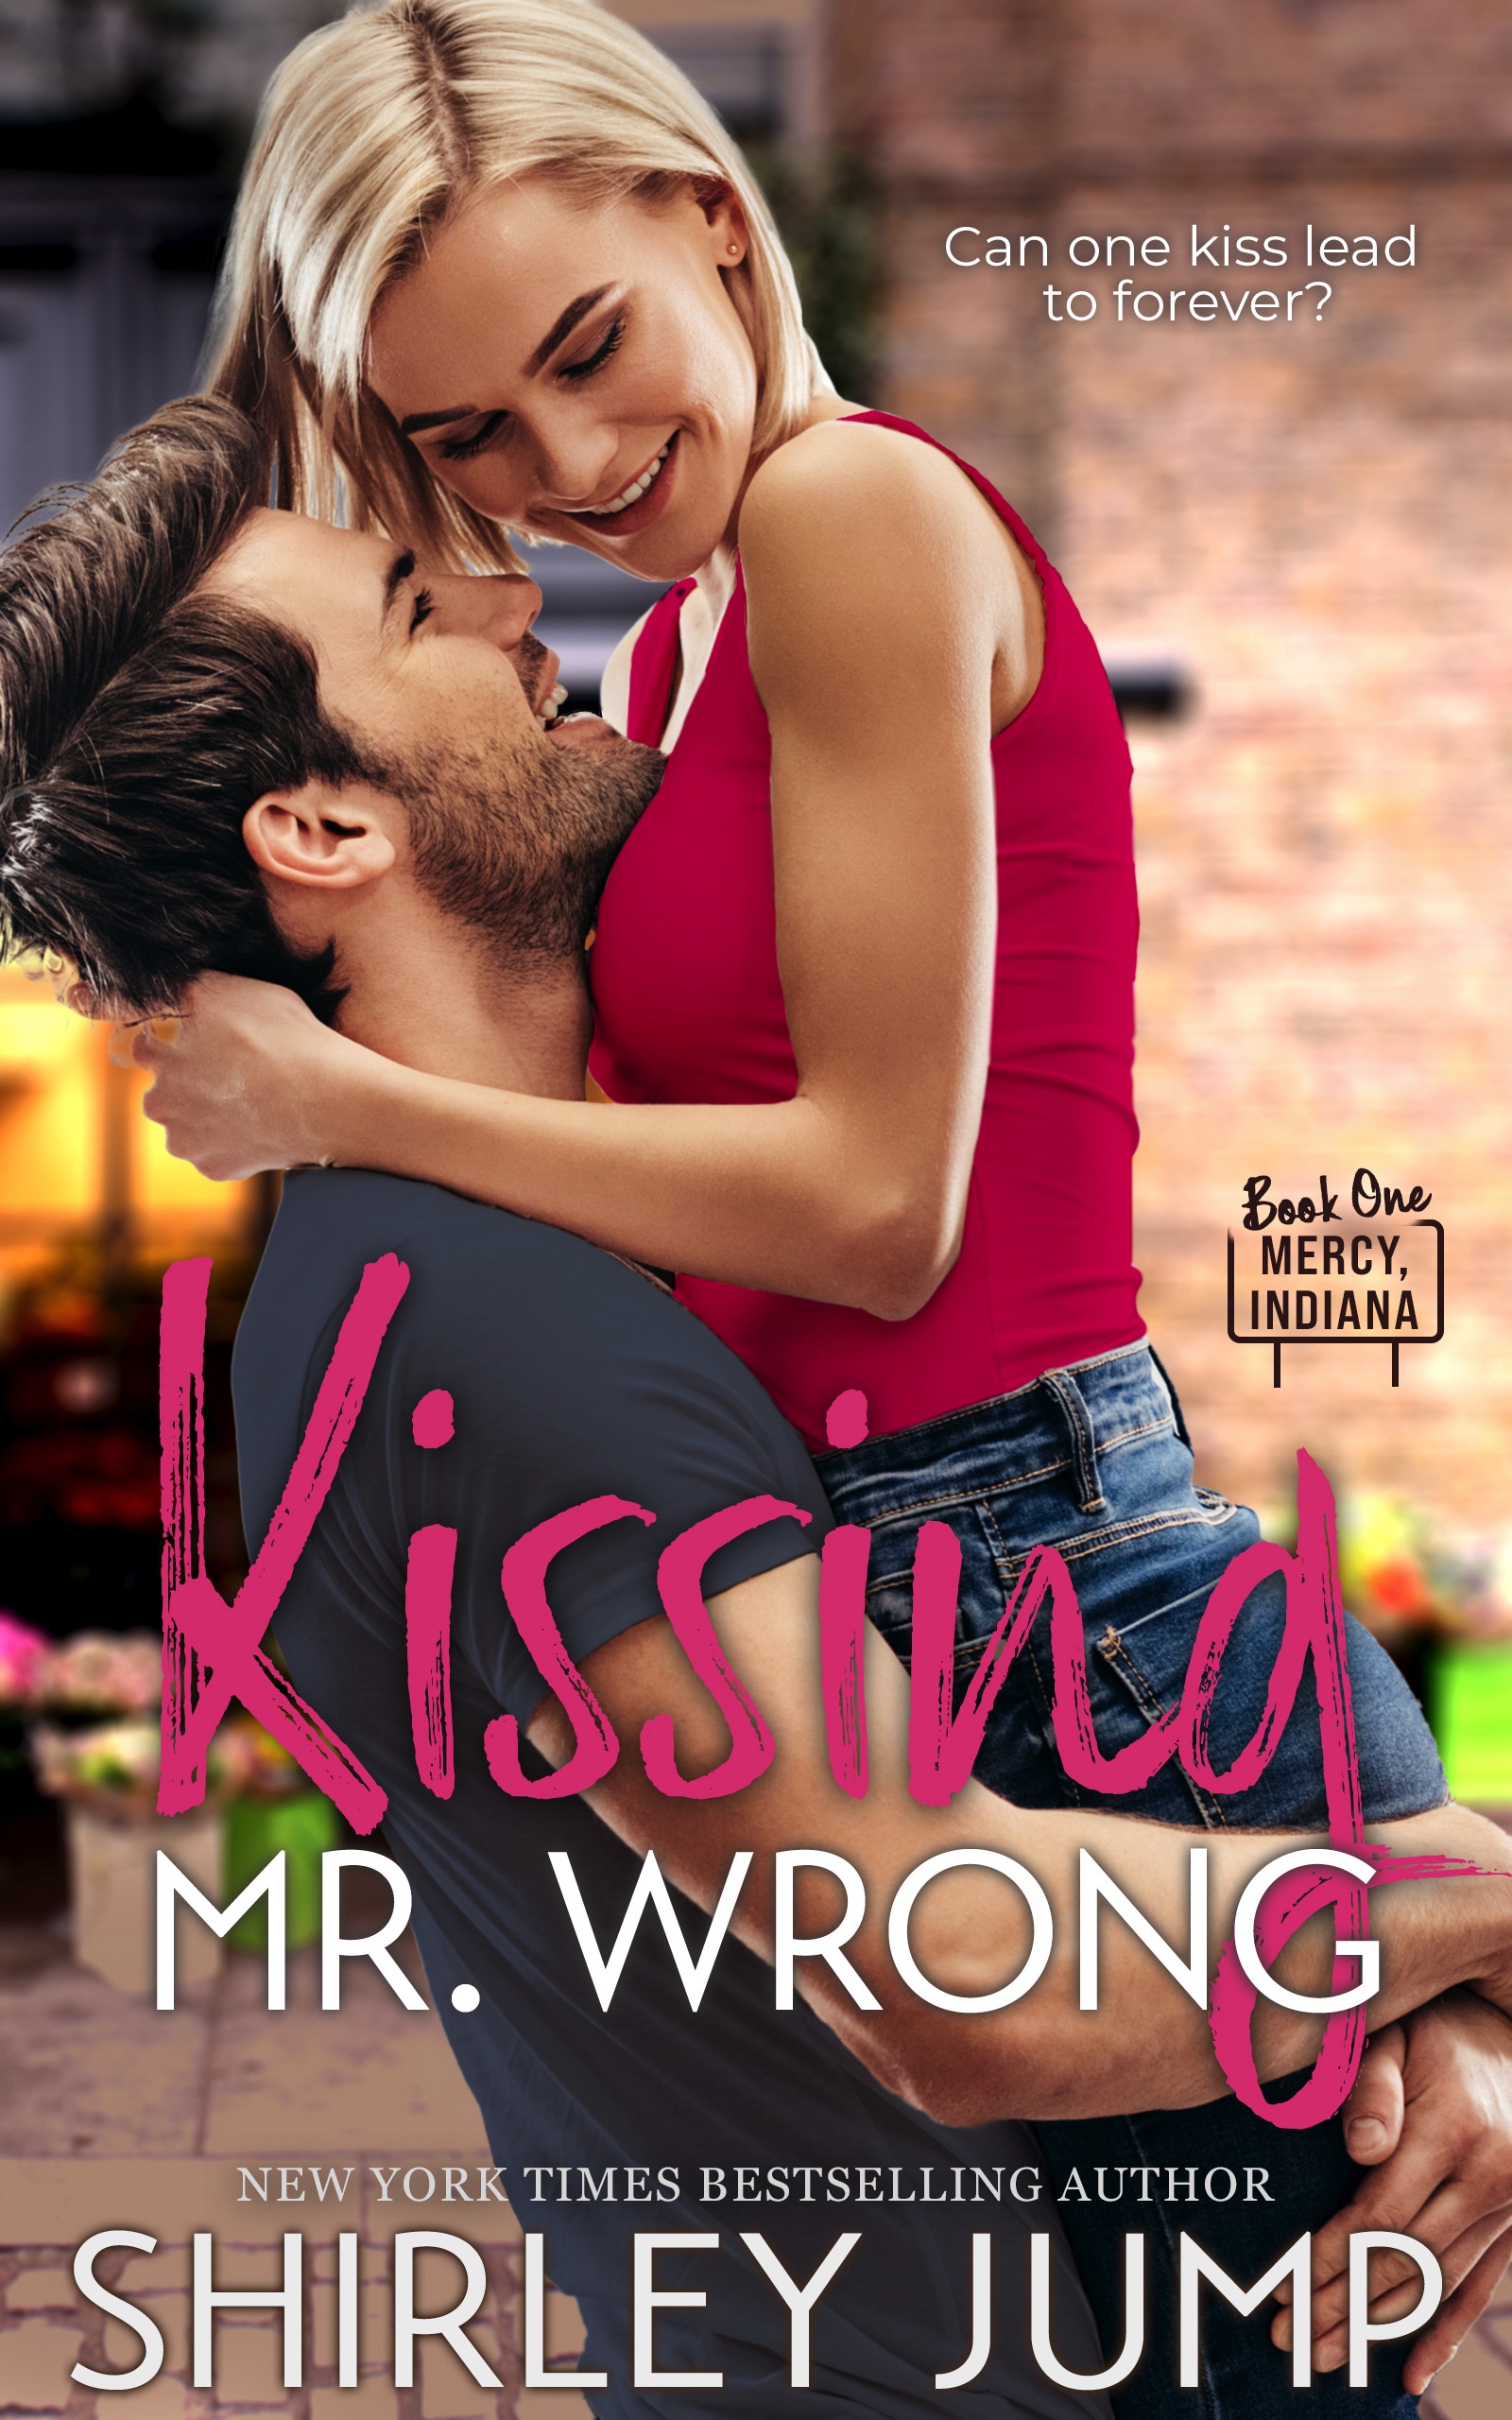 FREE: Kissing Mr. Wrong by Shirley Jump